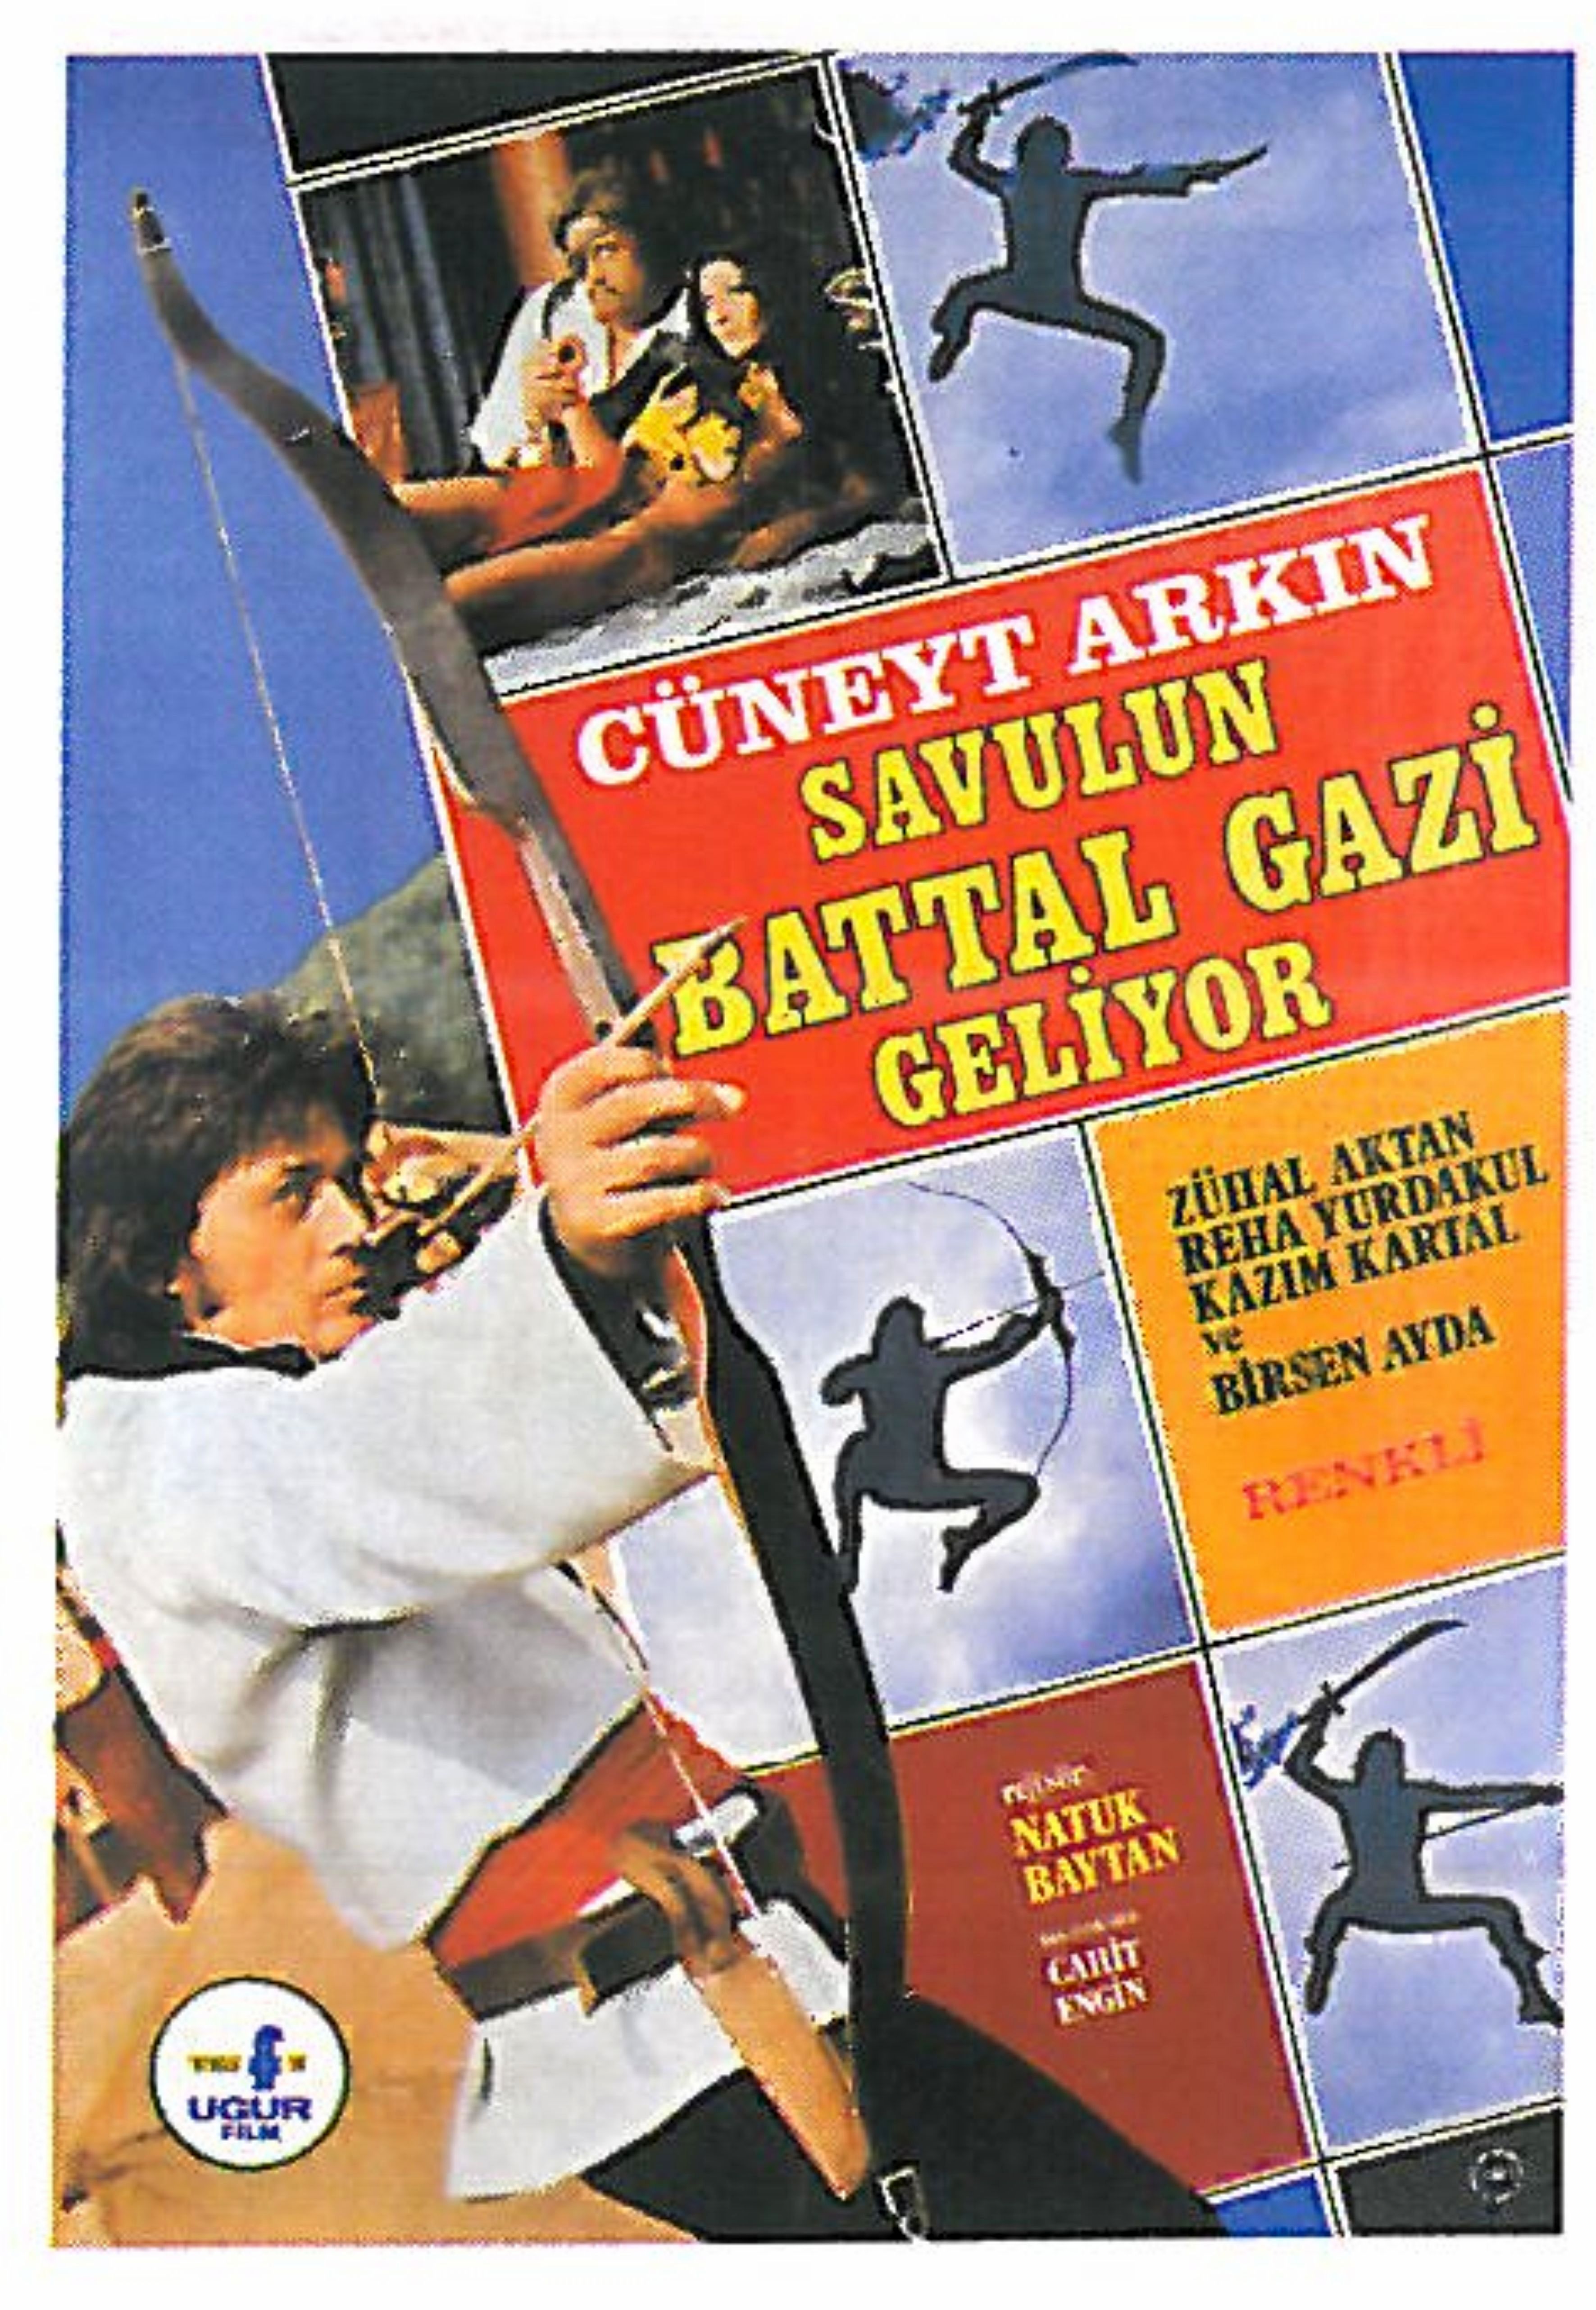 Savulun Battal Gazi geliyor (1973) with English Subtitles on DVD on DVD